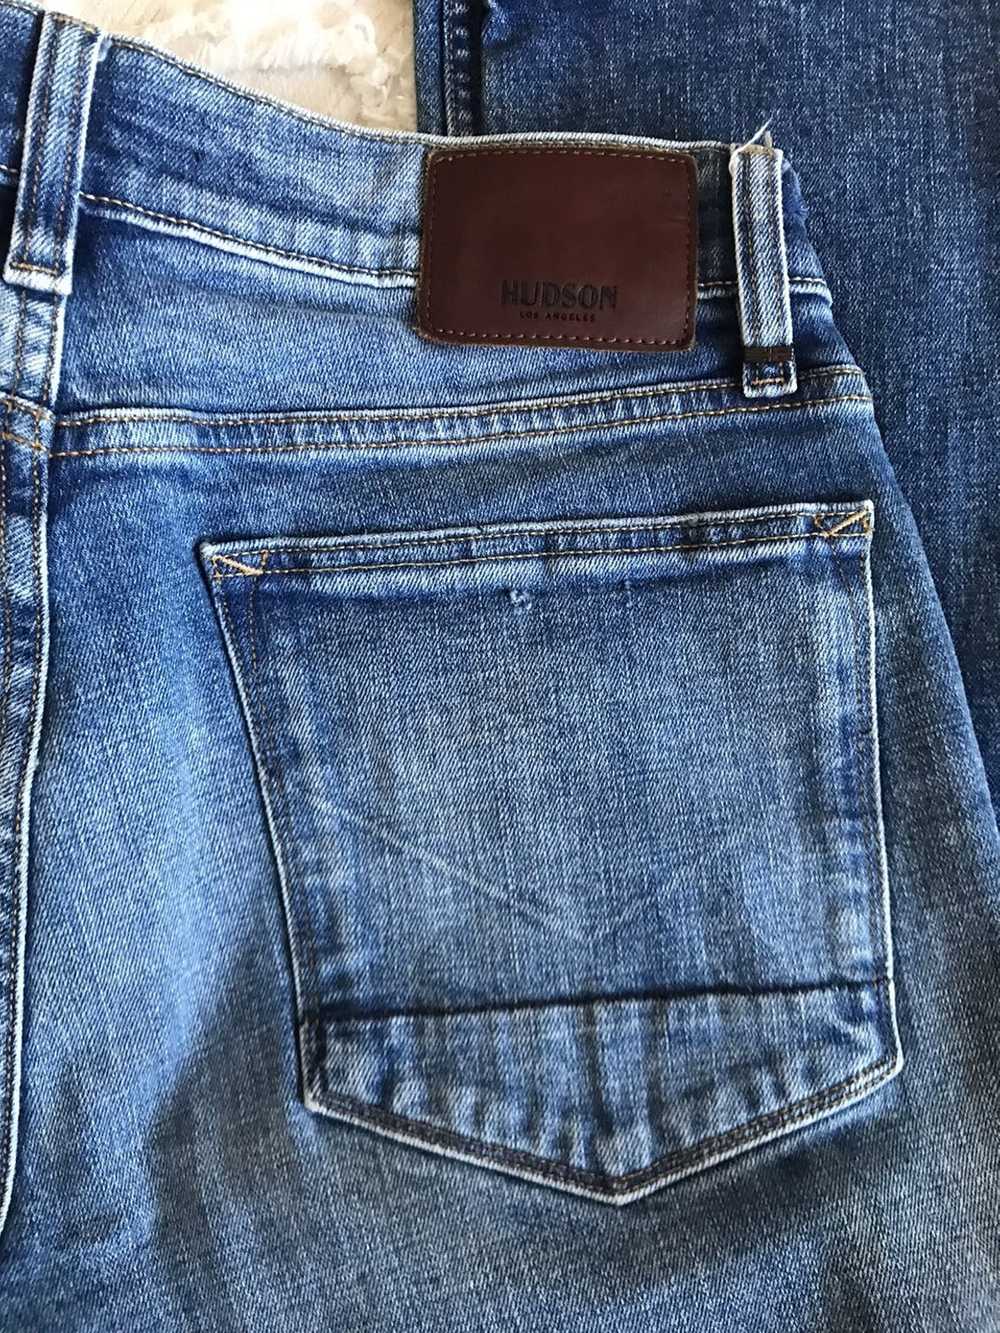 Hudson Hudson men’s jeans 32/32 - image 1